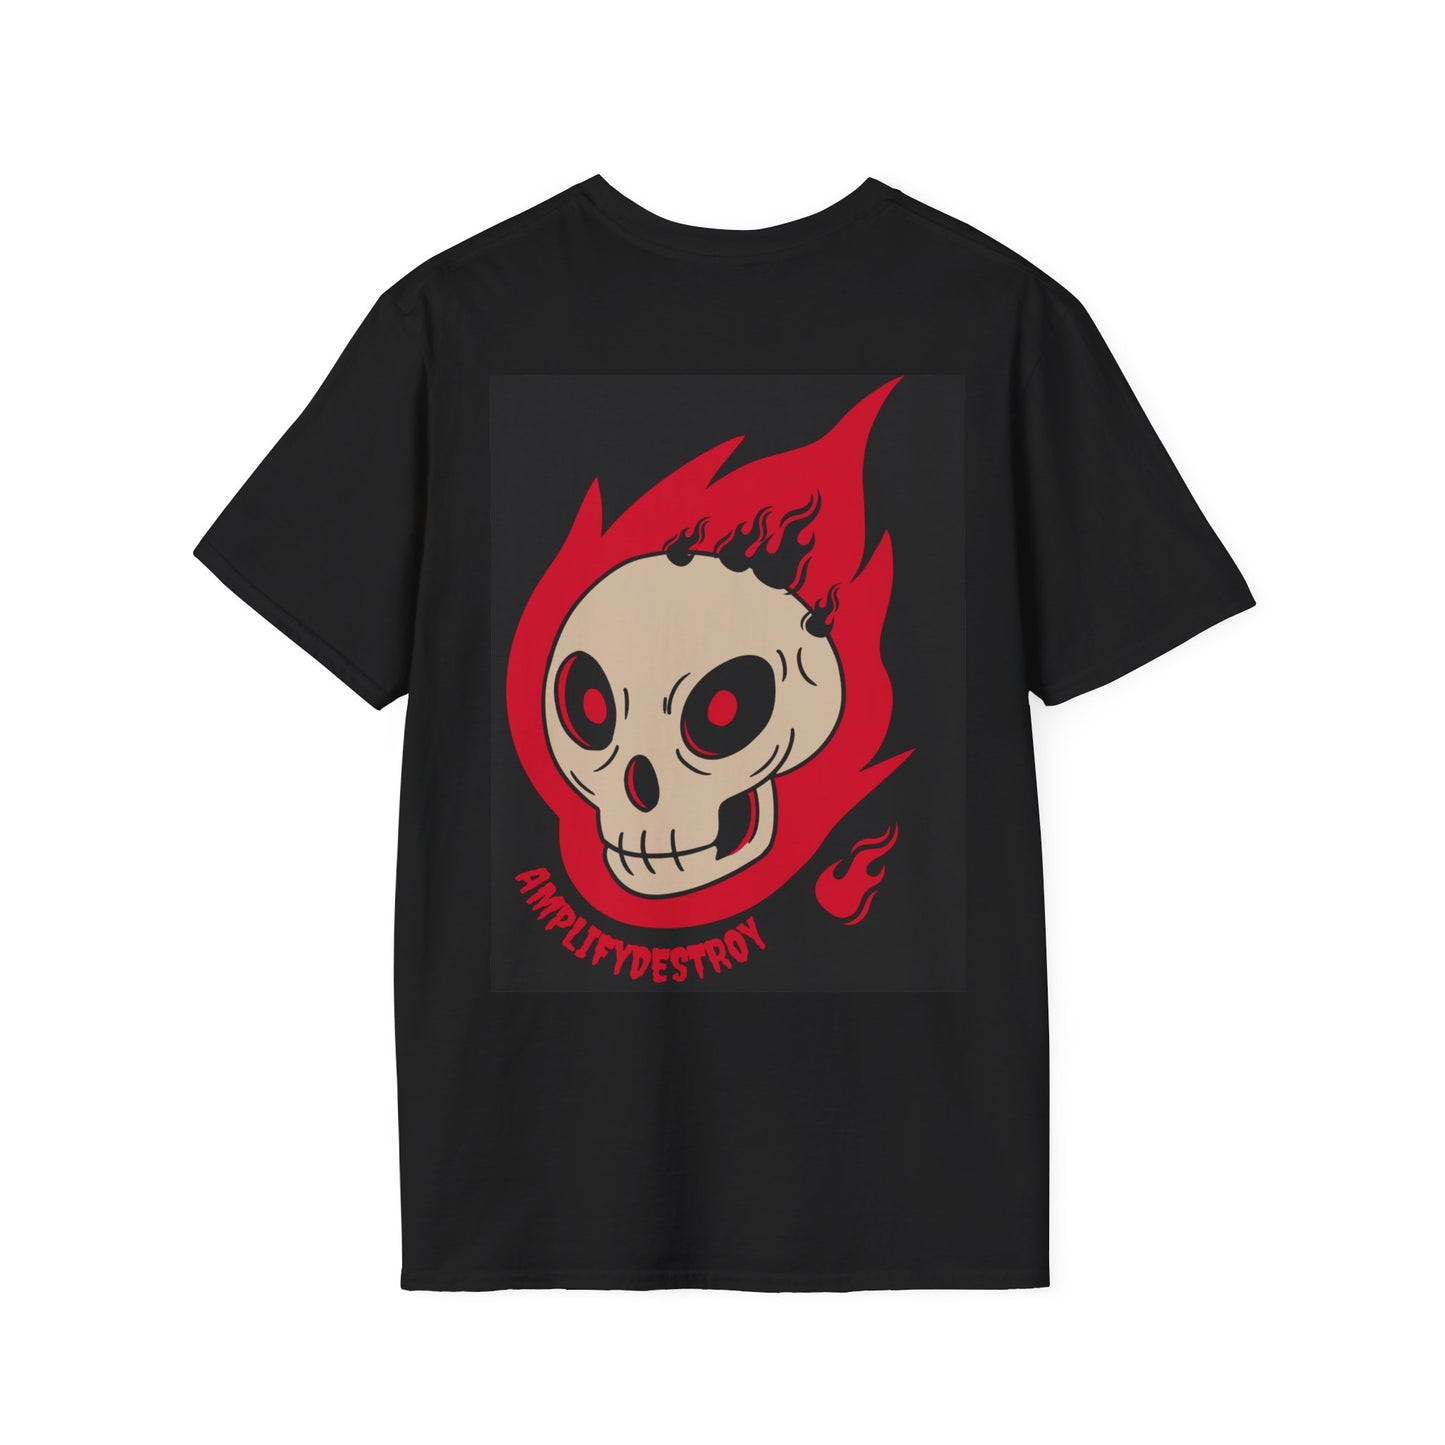 FLAMEHEAD Classic Fit AmplifyDestroy Print Tee Shirt Black Biker Rock Metal